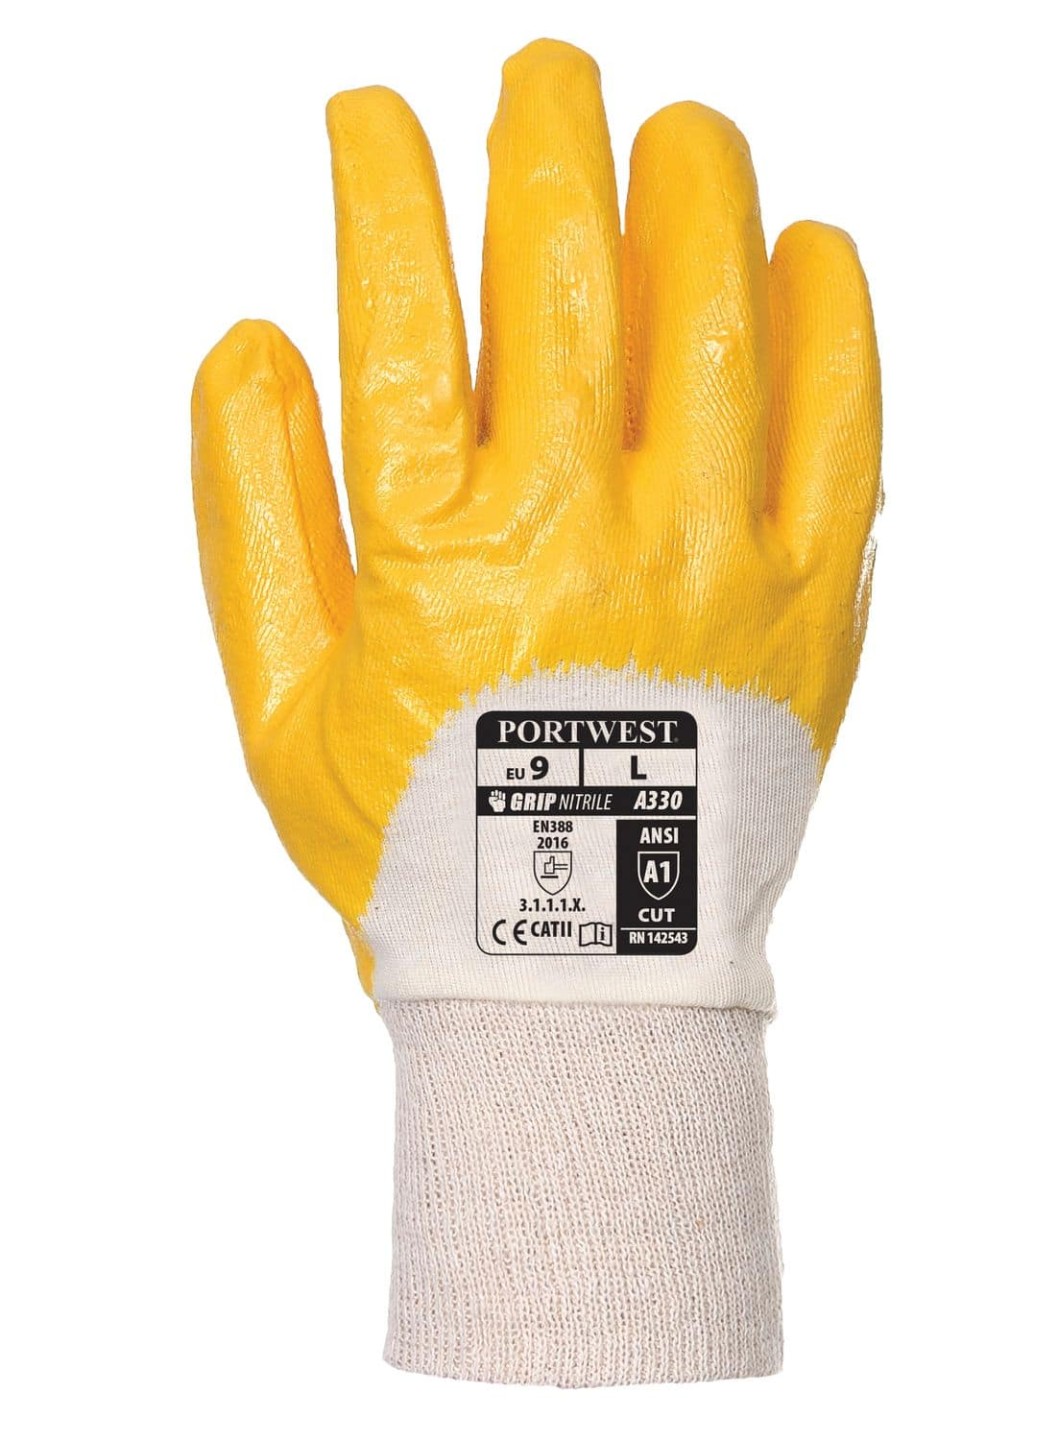 Portwest Nitrile Light Knitwrist Glove